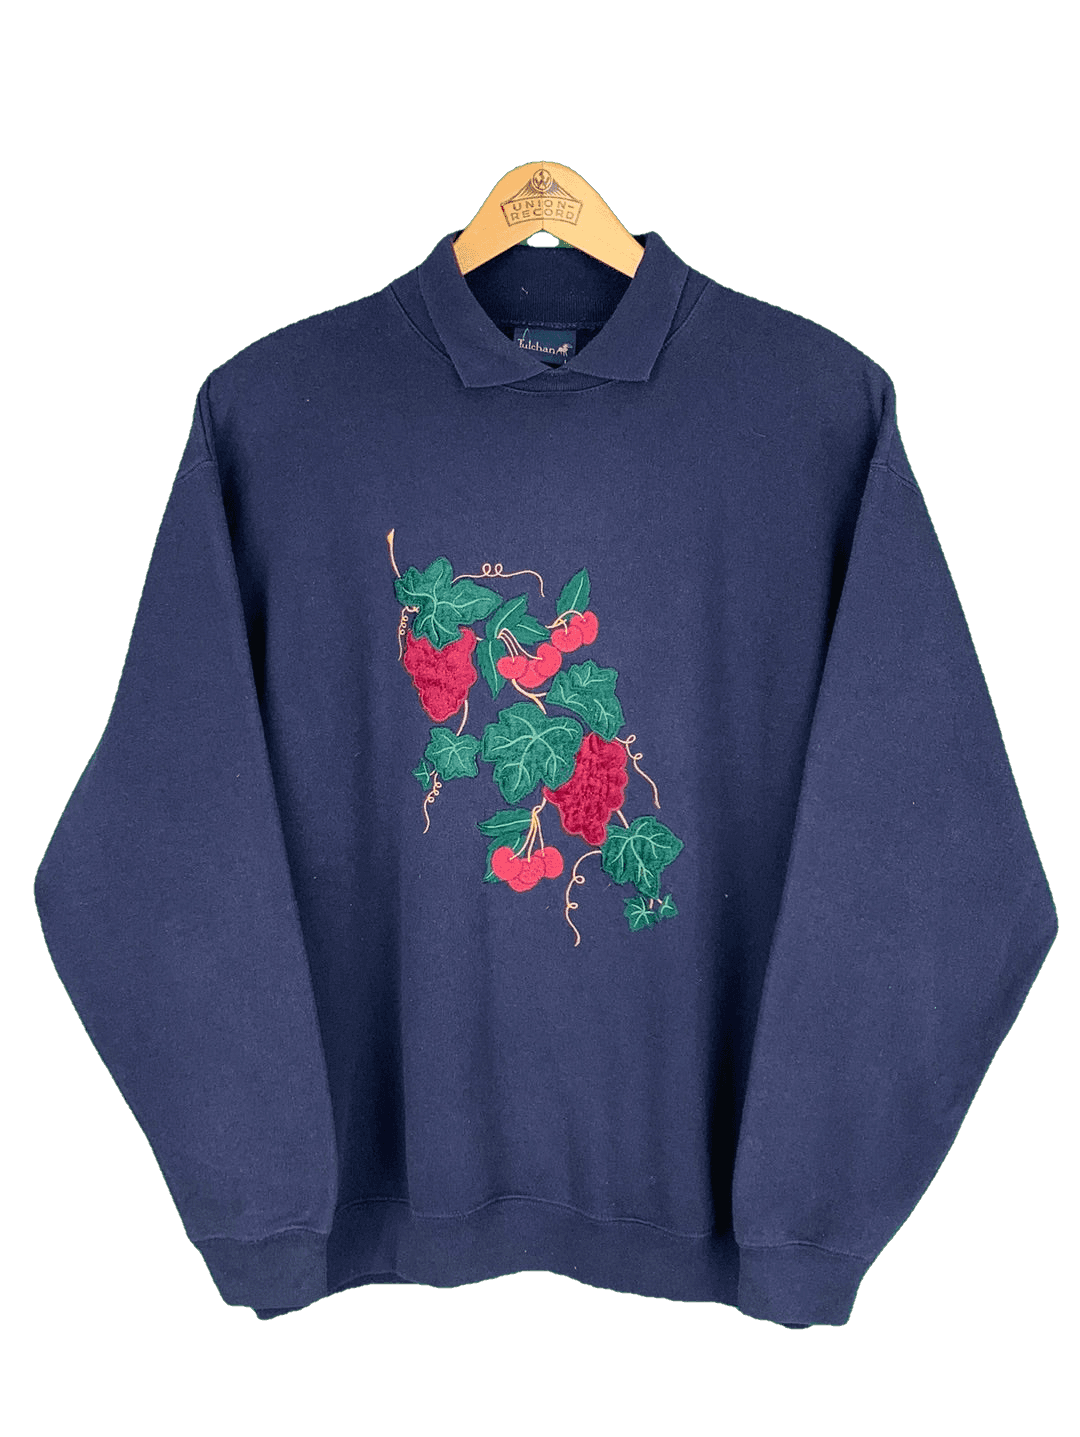 Tulchan Sweater (L)